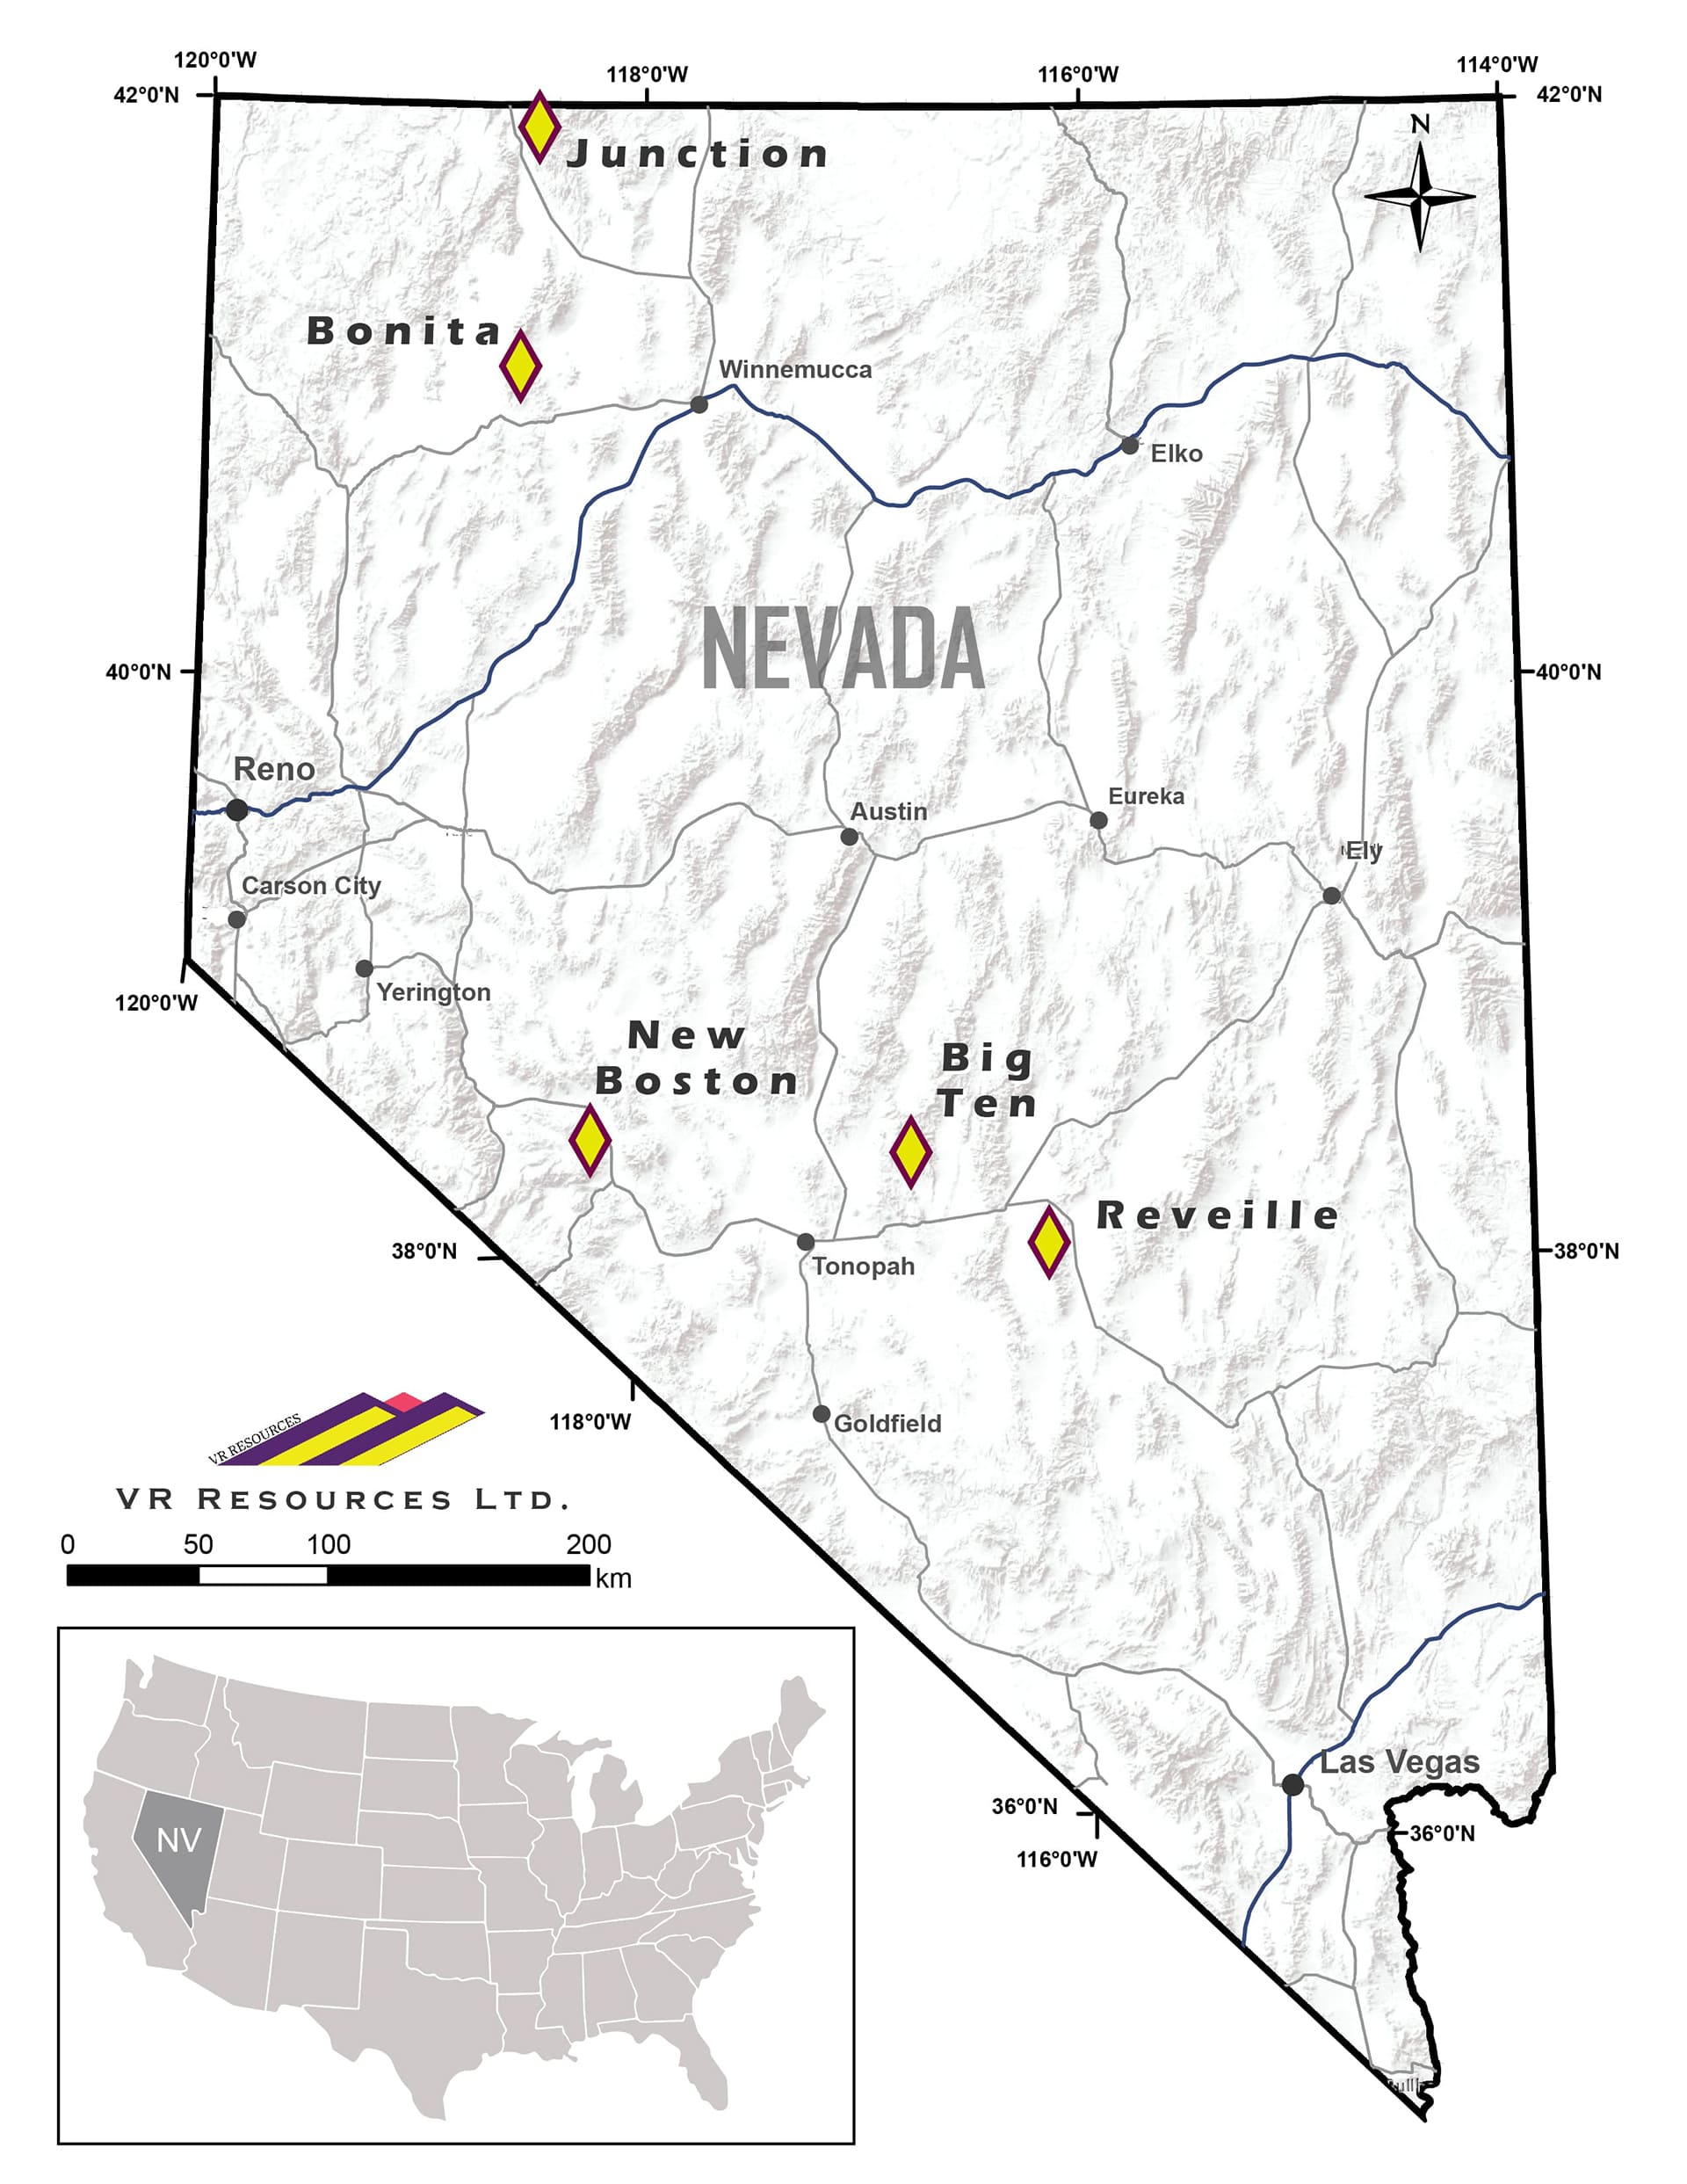 VR Property Portfolio map for Nevada